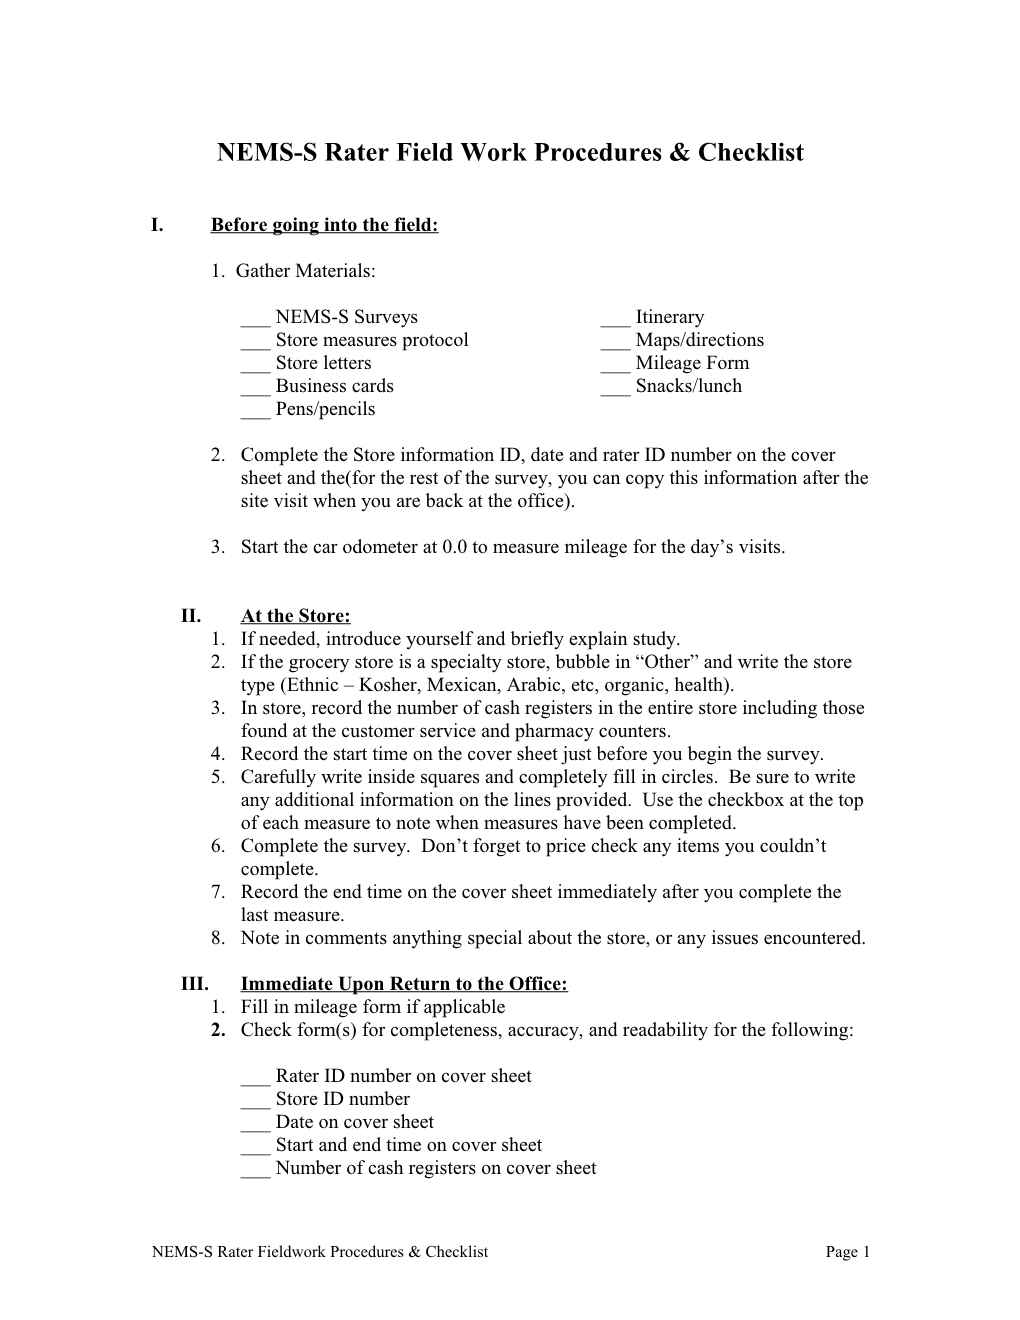 NEMS Rater Field Work Procedures & Checklist- STORES